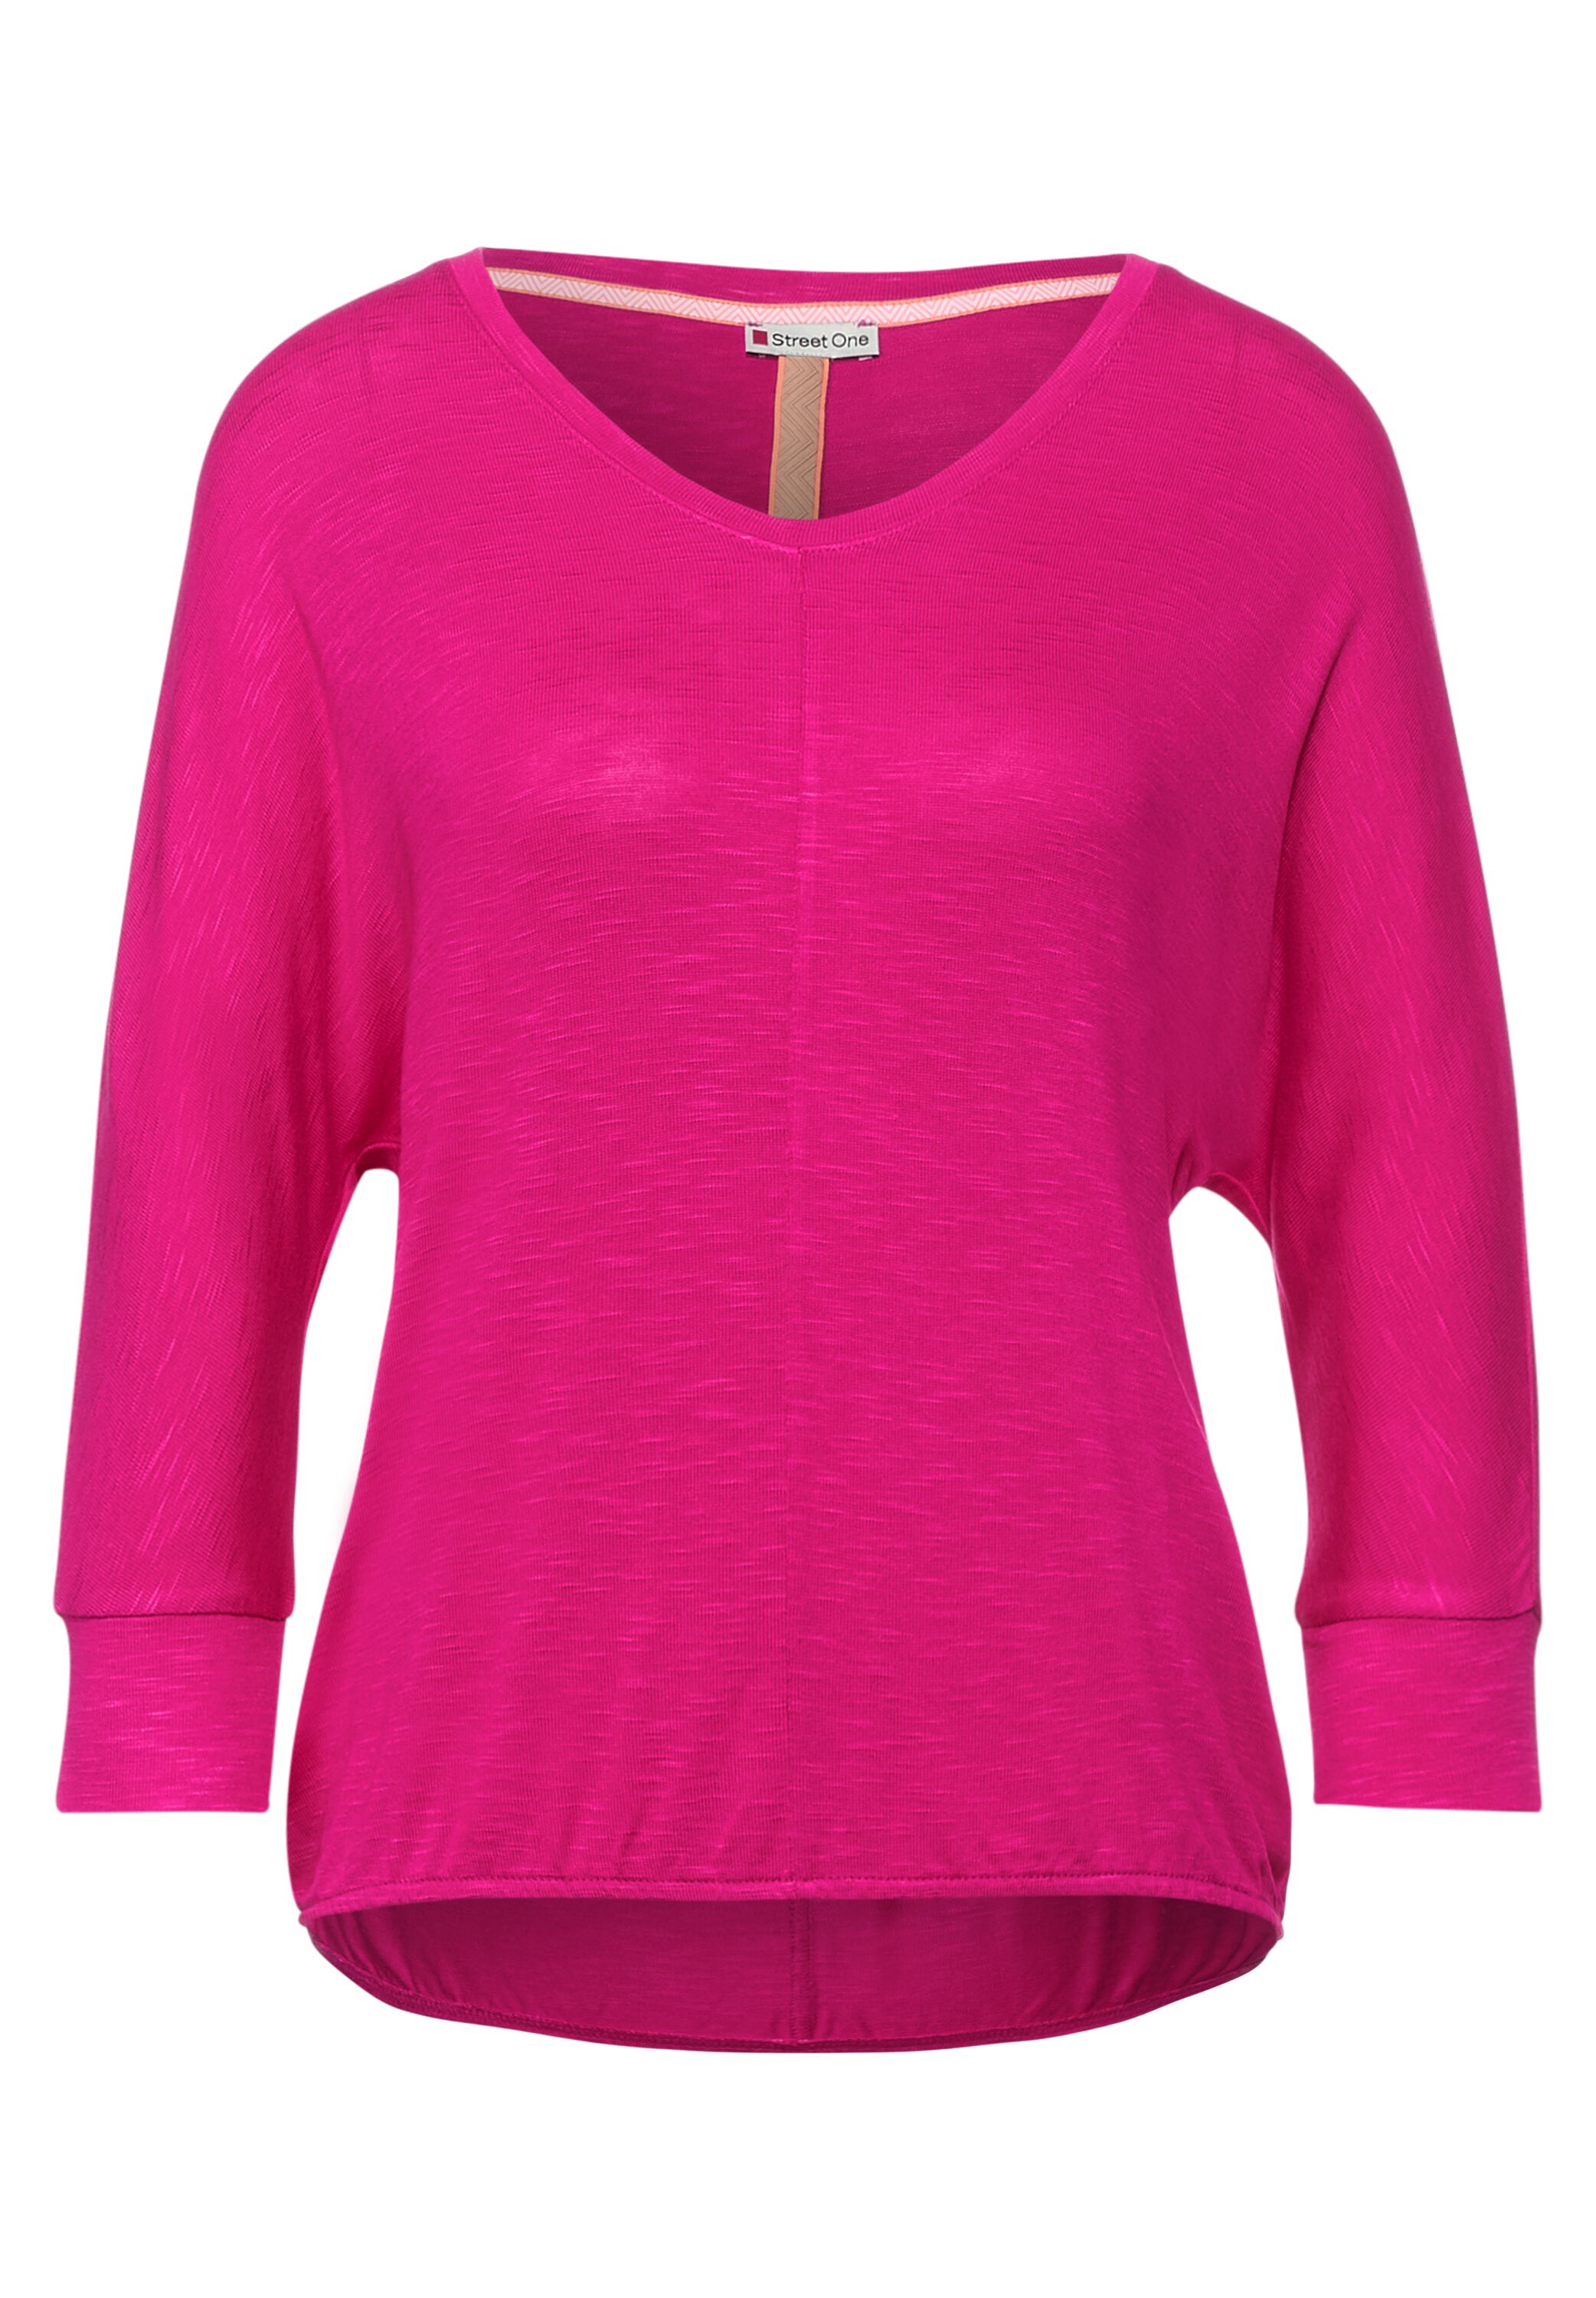 Street One Mode - Ellen A317573-13611 CONCEPT Shirt Powerful SALE reduziert Pink in im